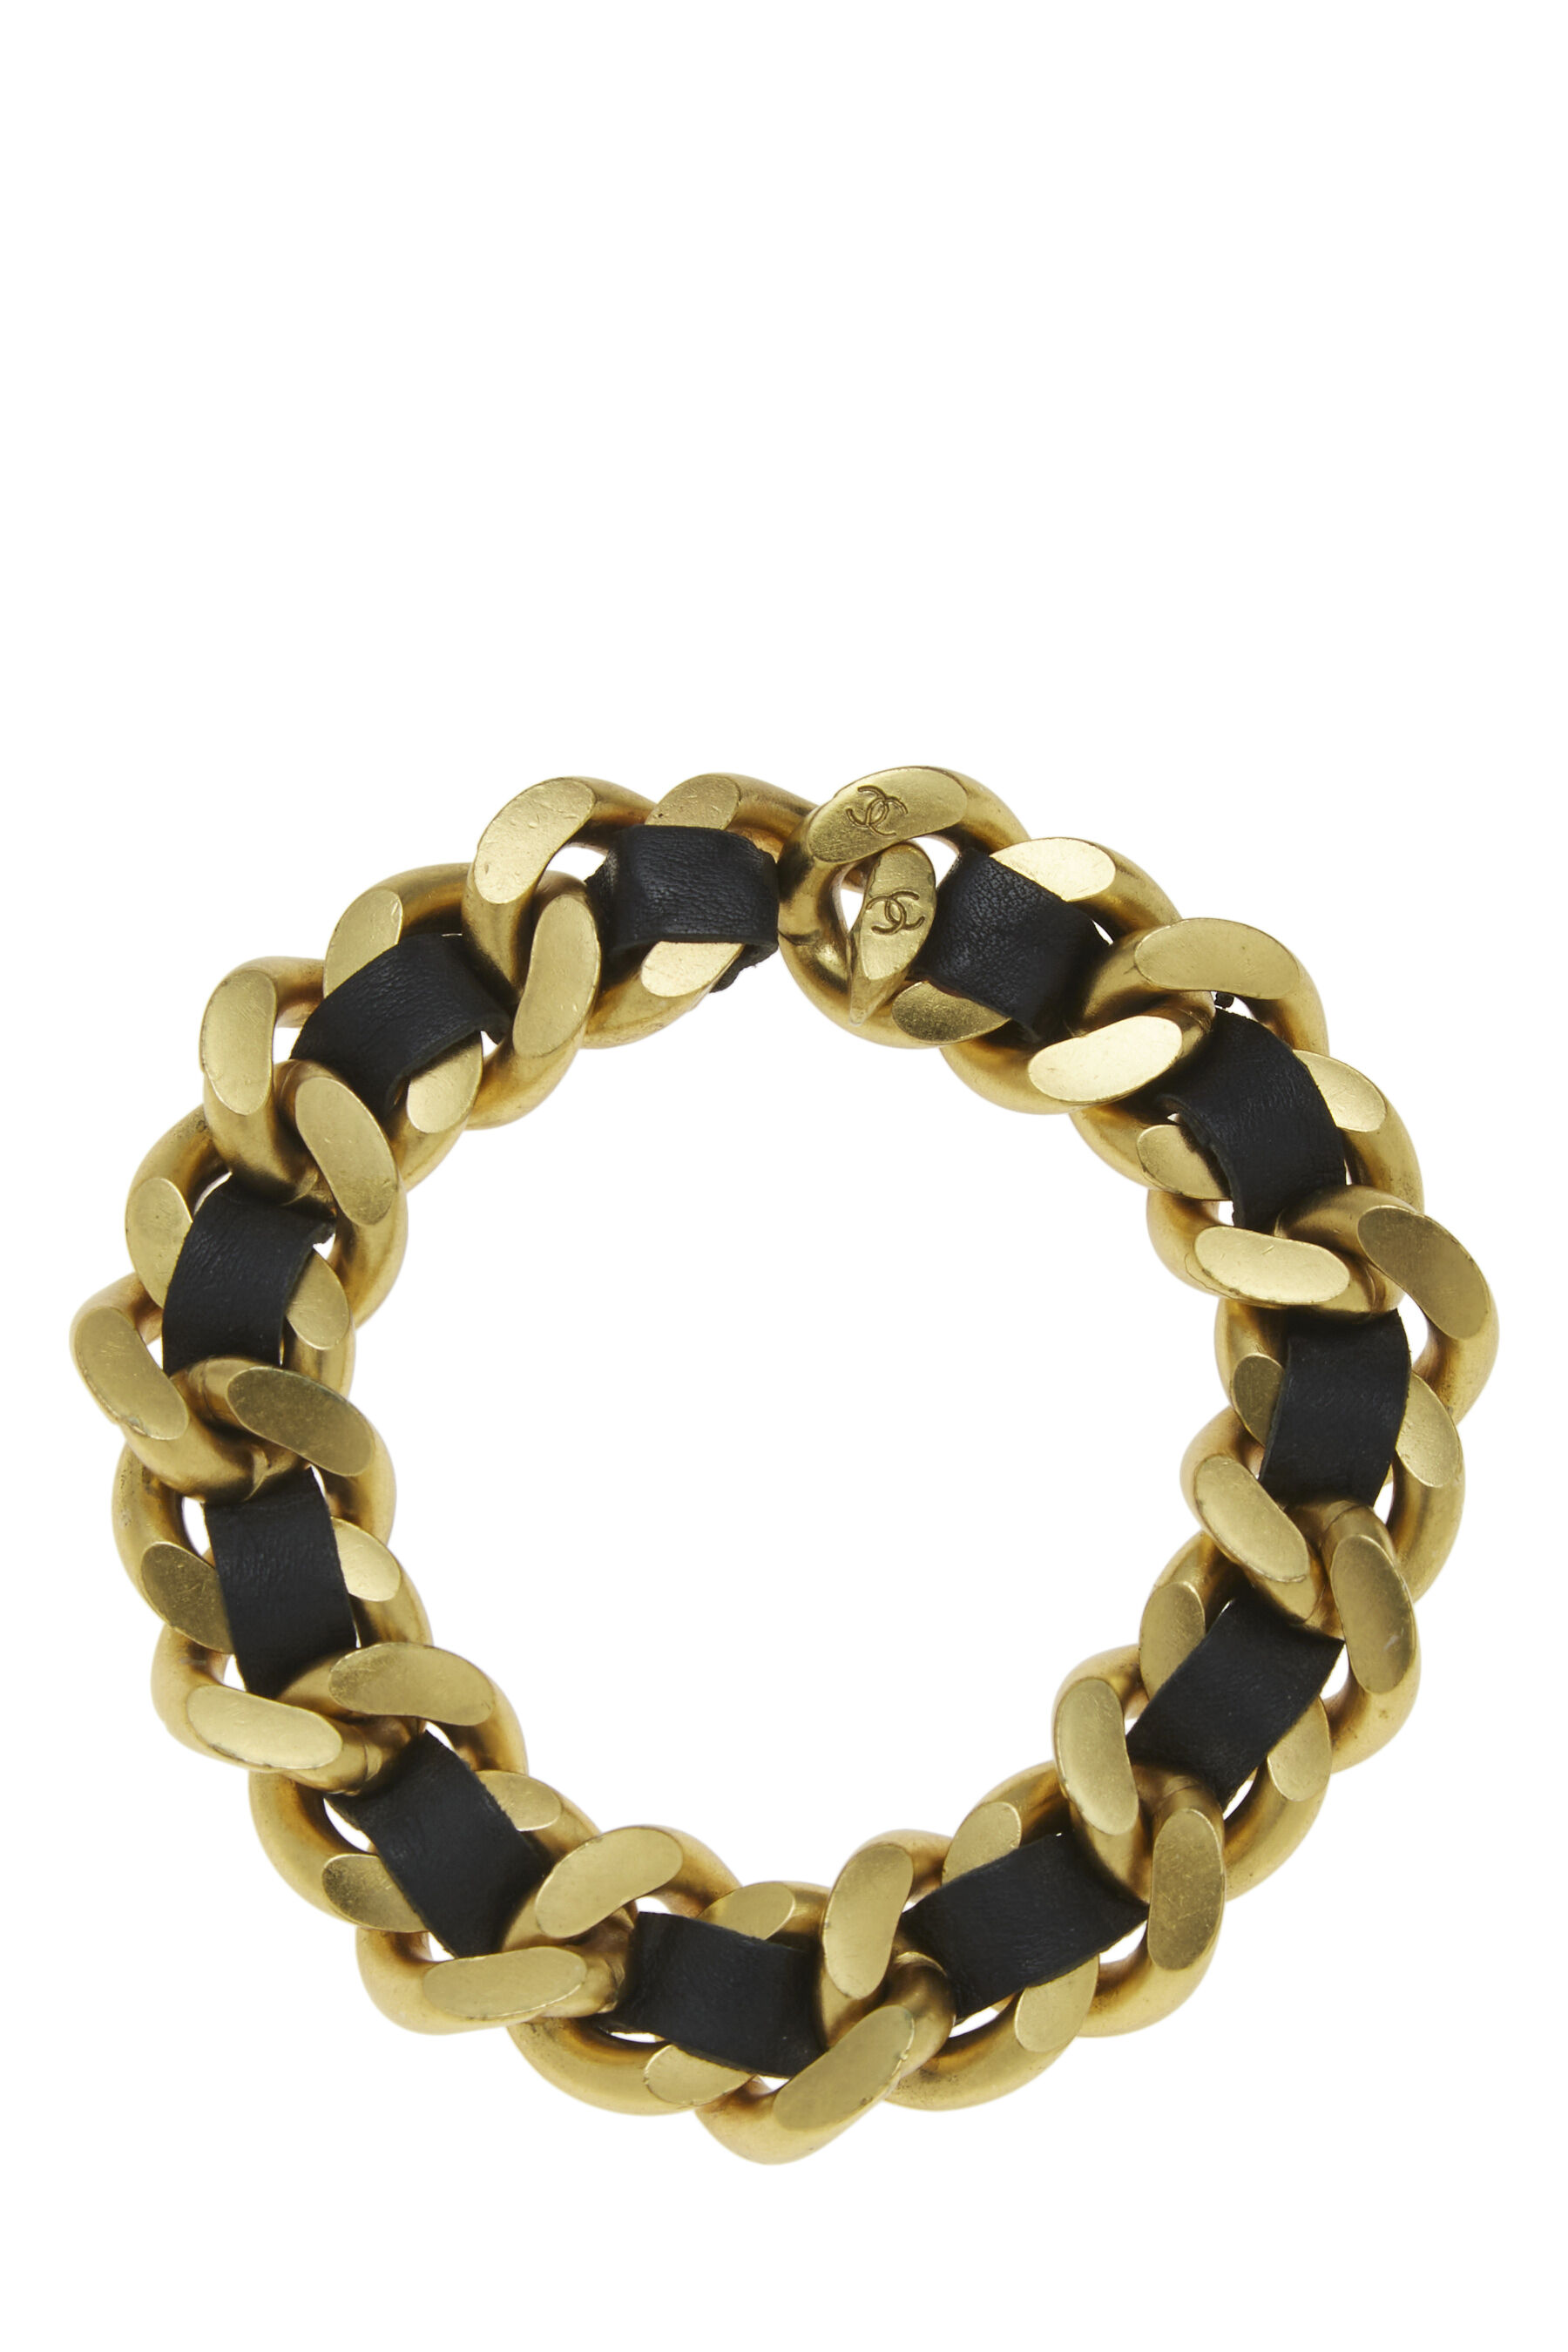 CHANEL Leather Gold Fashion Bracelets for sale